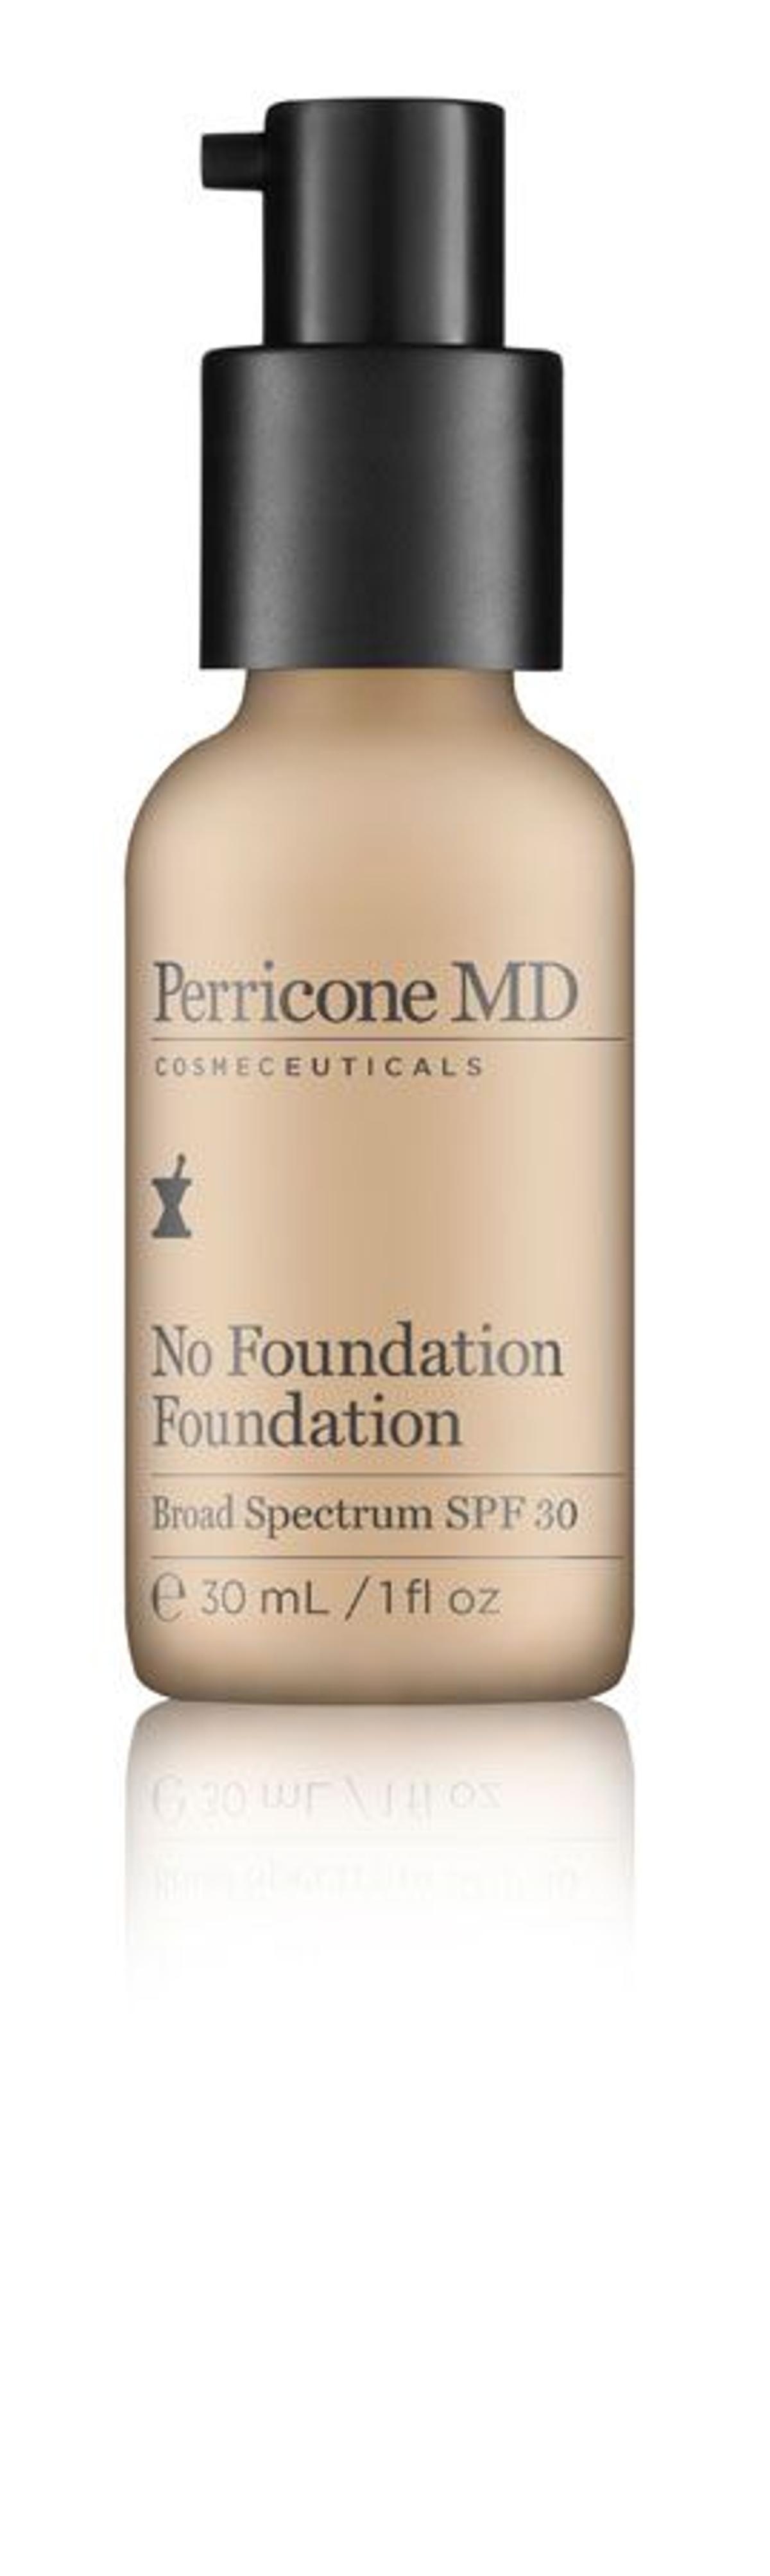 No Foundation Foundation, Perricone MD